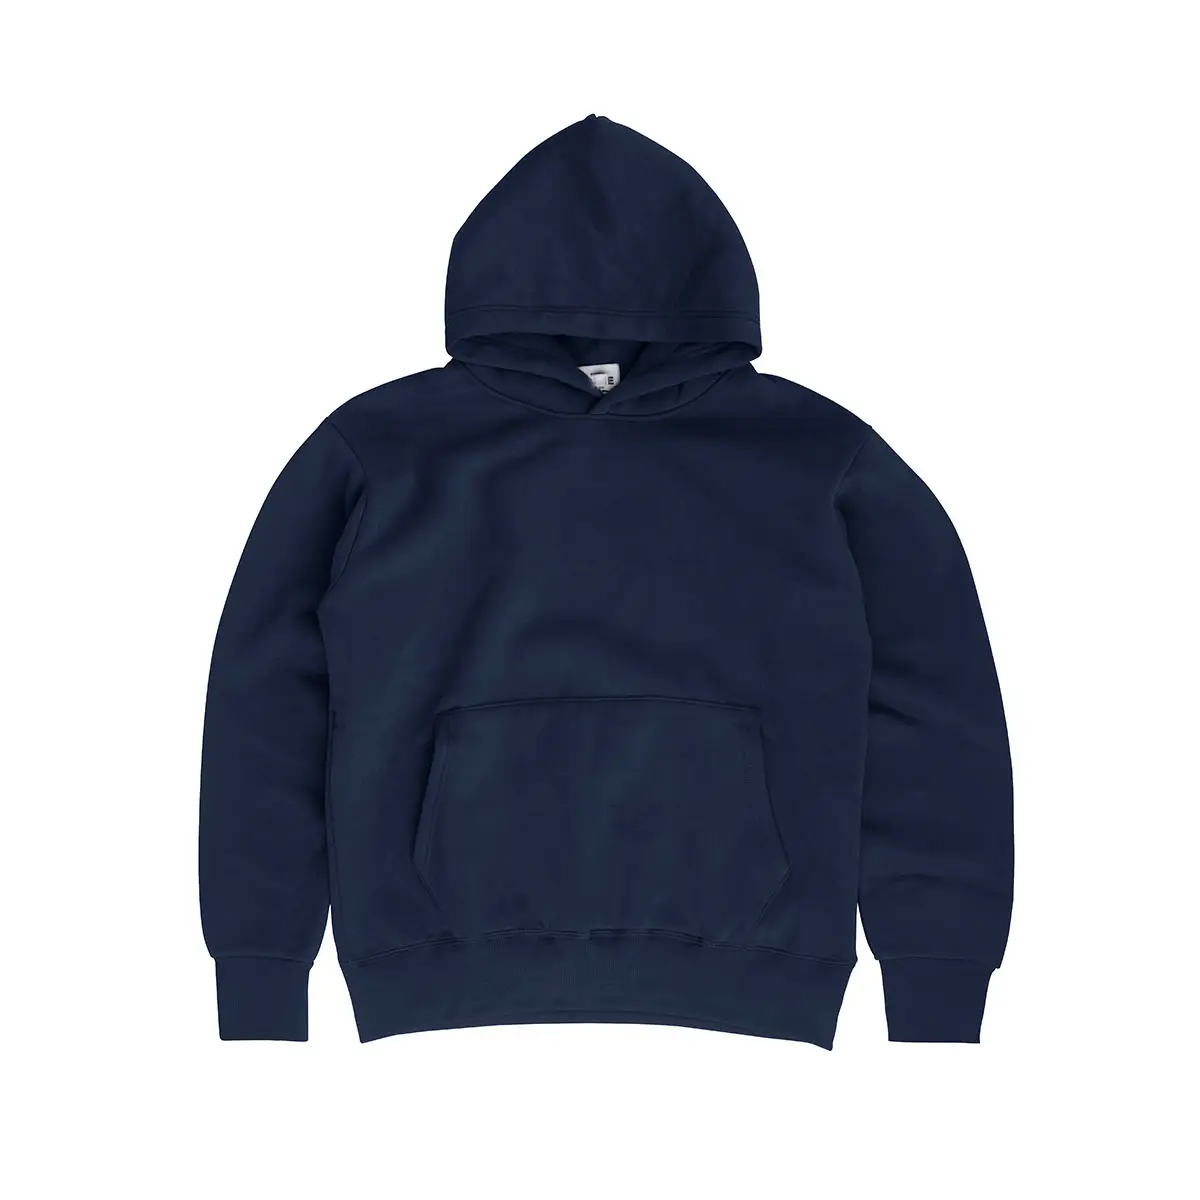 custom street wear plain hoodie 100% cotton embroidery 500 gsm heavy weight mens fleece oversized blank puffer print hoodies